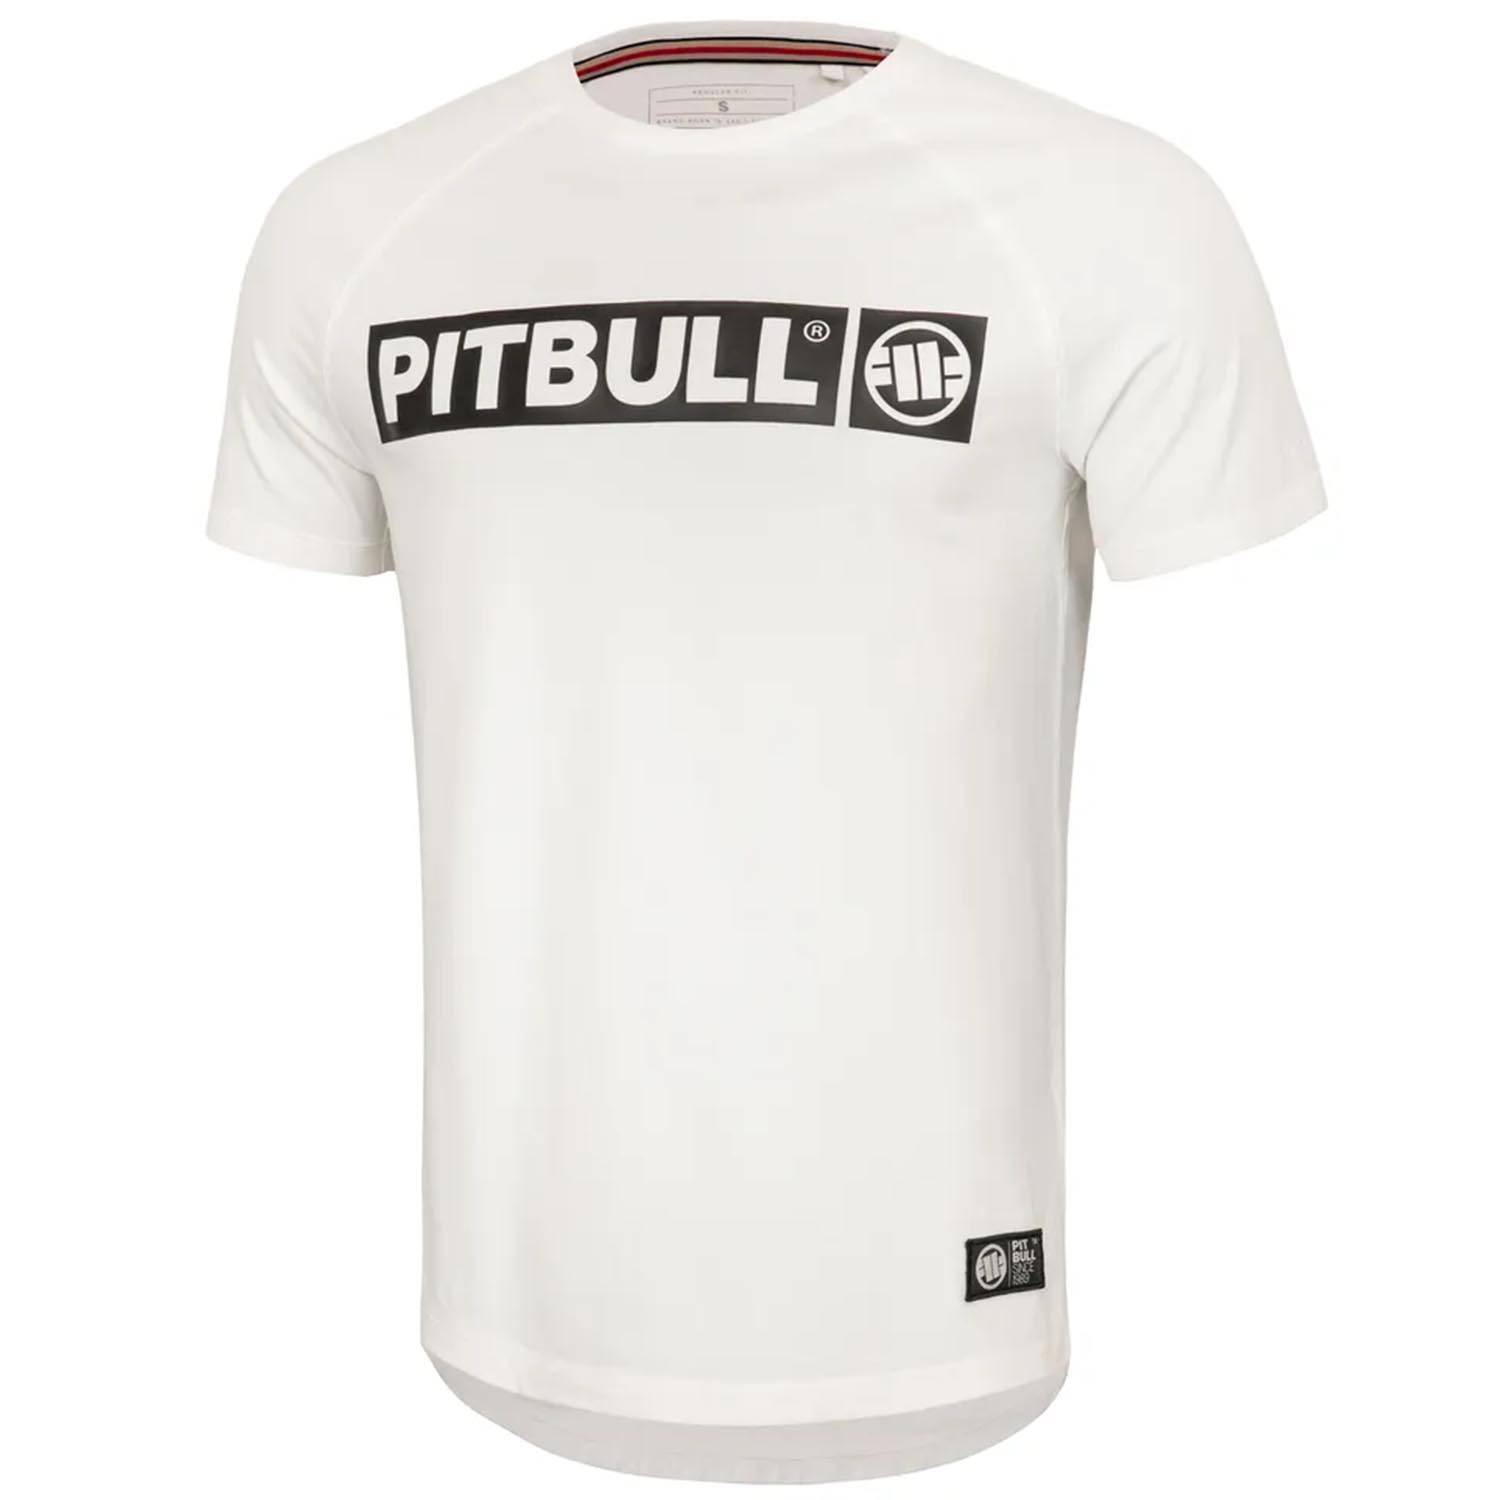 Pit Bull West Coast T-Shirt, Hilltop 210 Spandex, white